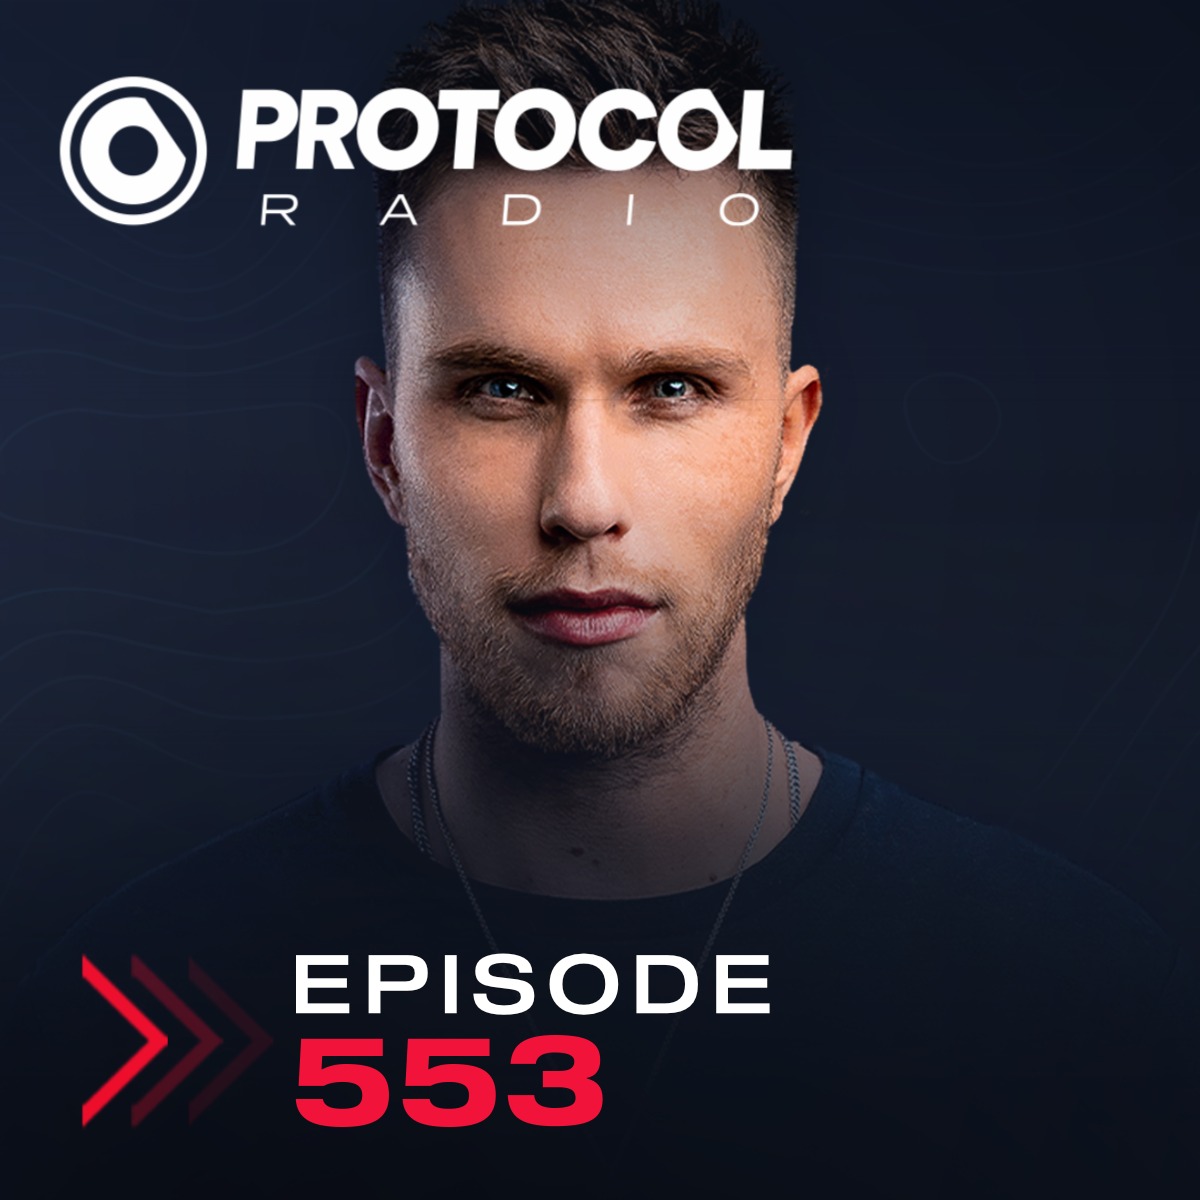 Protocol Radio Protocol Radio #PRR553